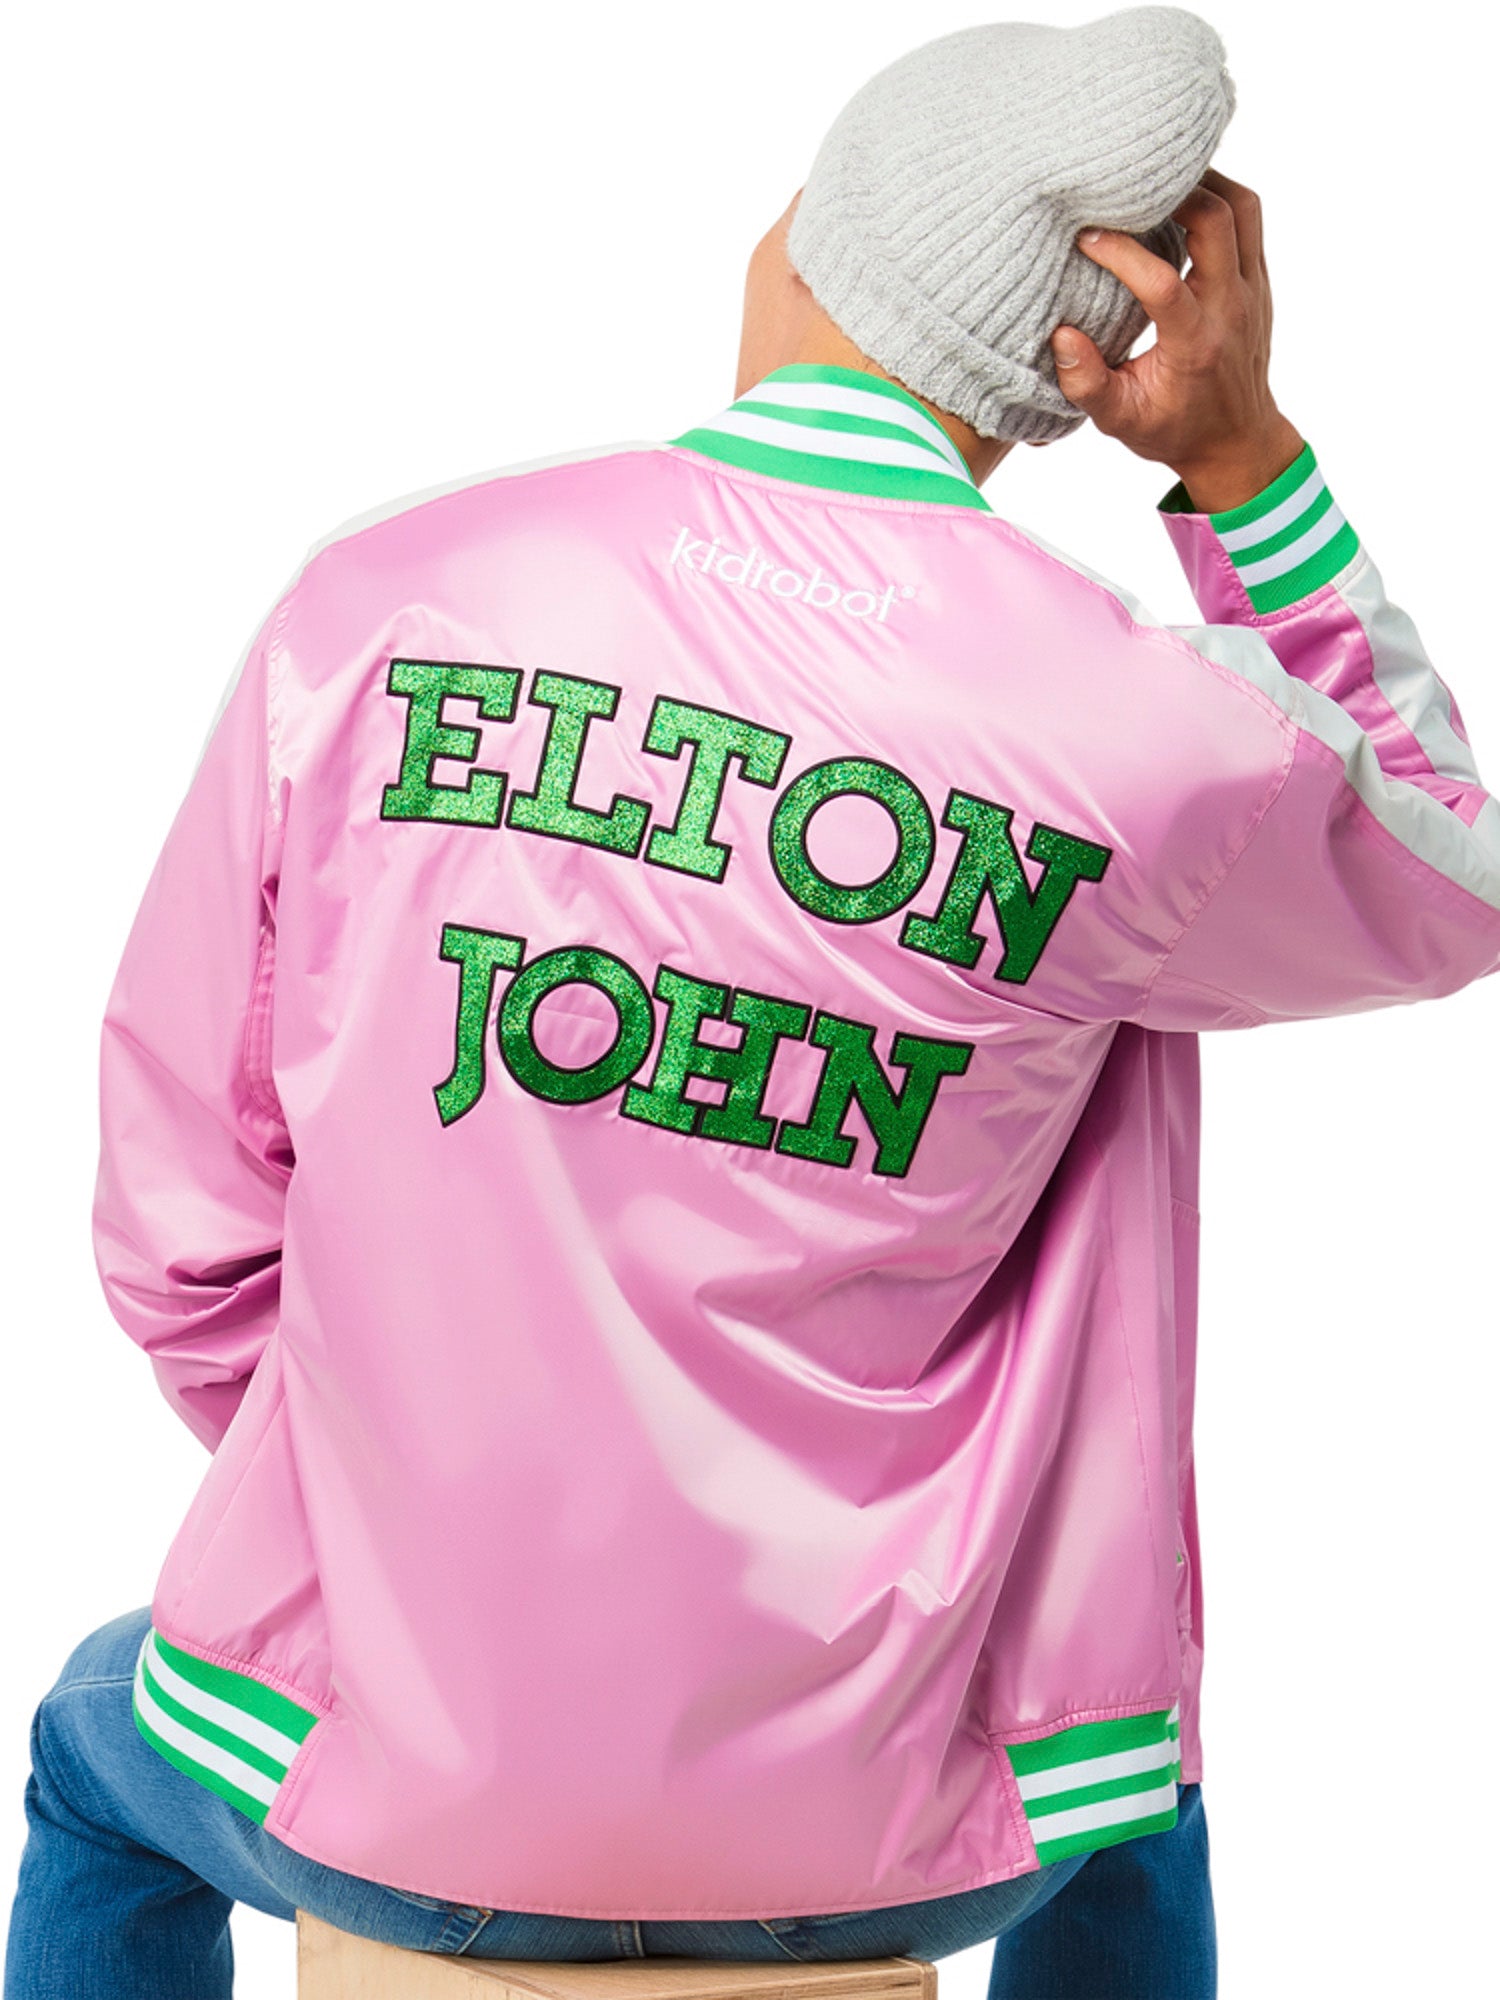 Kidrobot - Elton John "Goodbye Yellow Brick Road" Pink Satin Jacket - X-Large - costumes.com